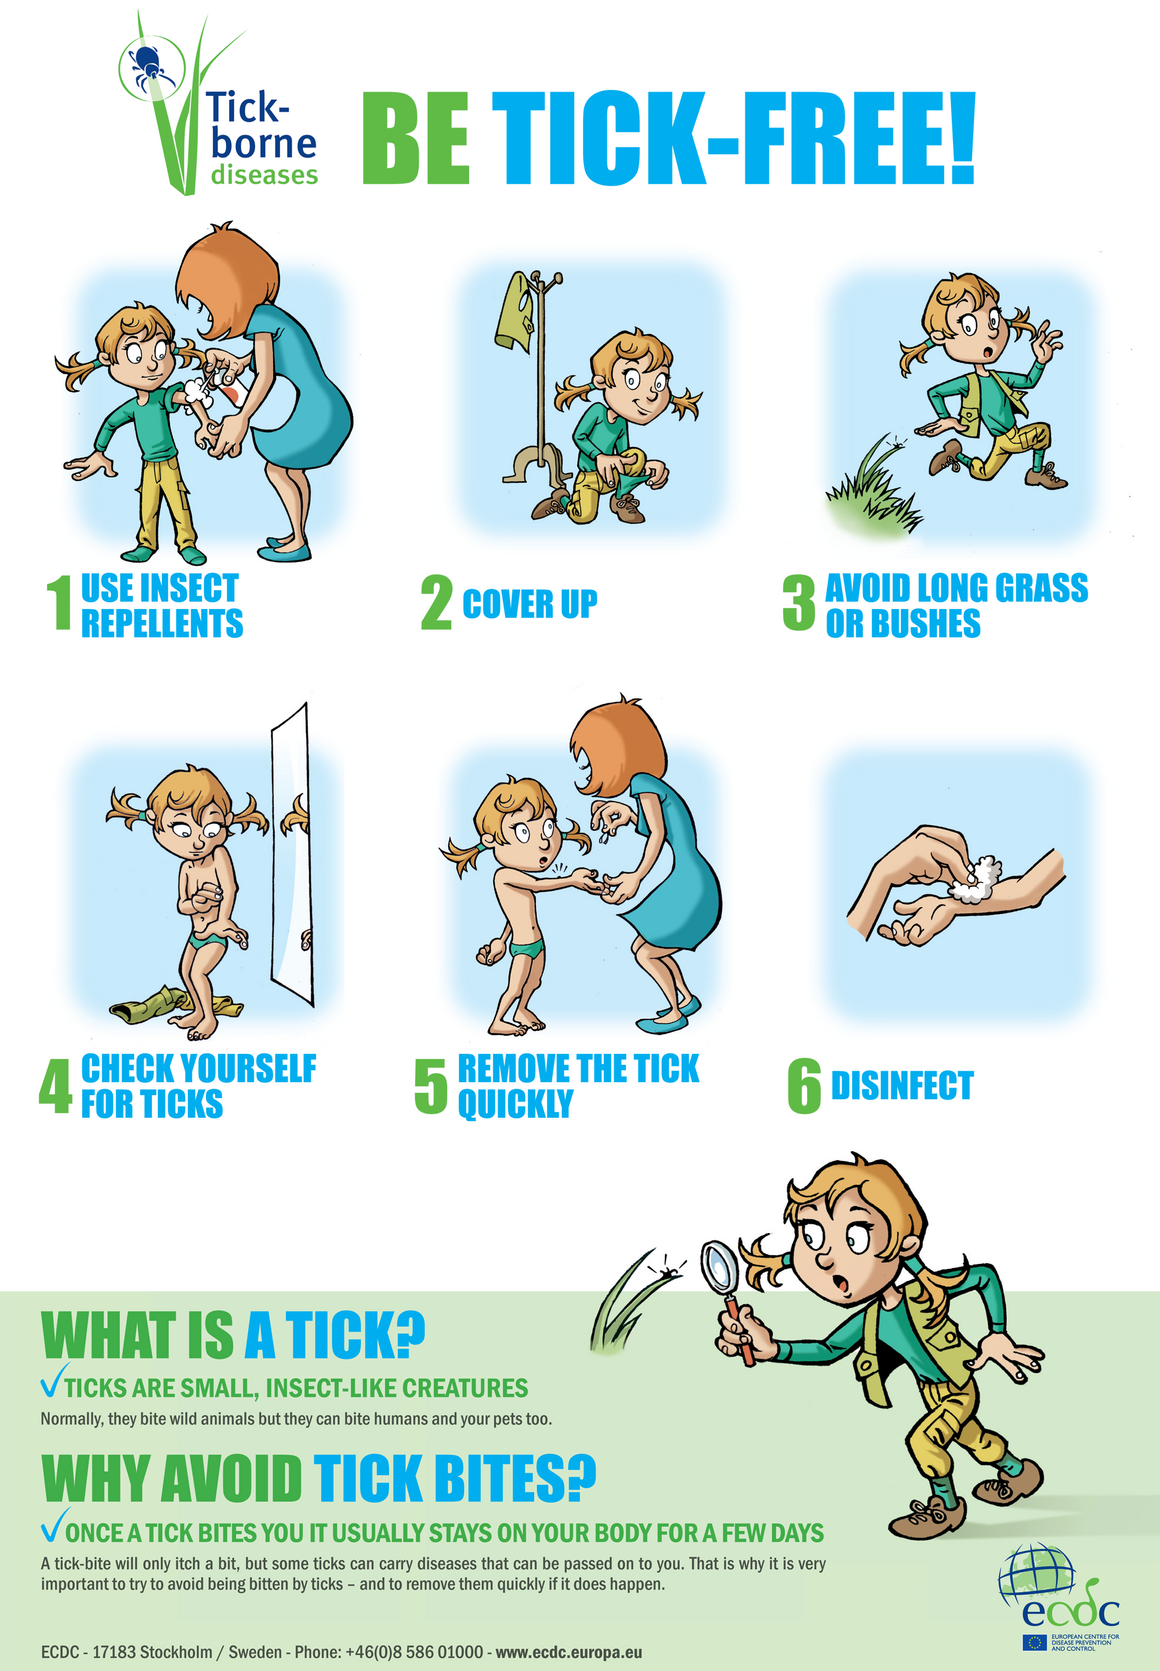 Poster on ticks and preventive measures, for children living in endemic